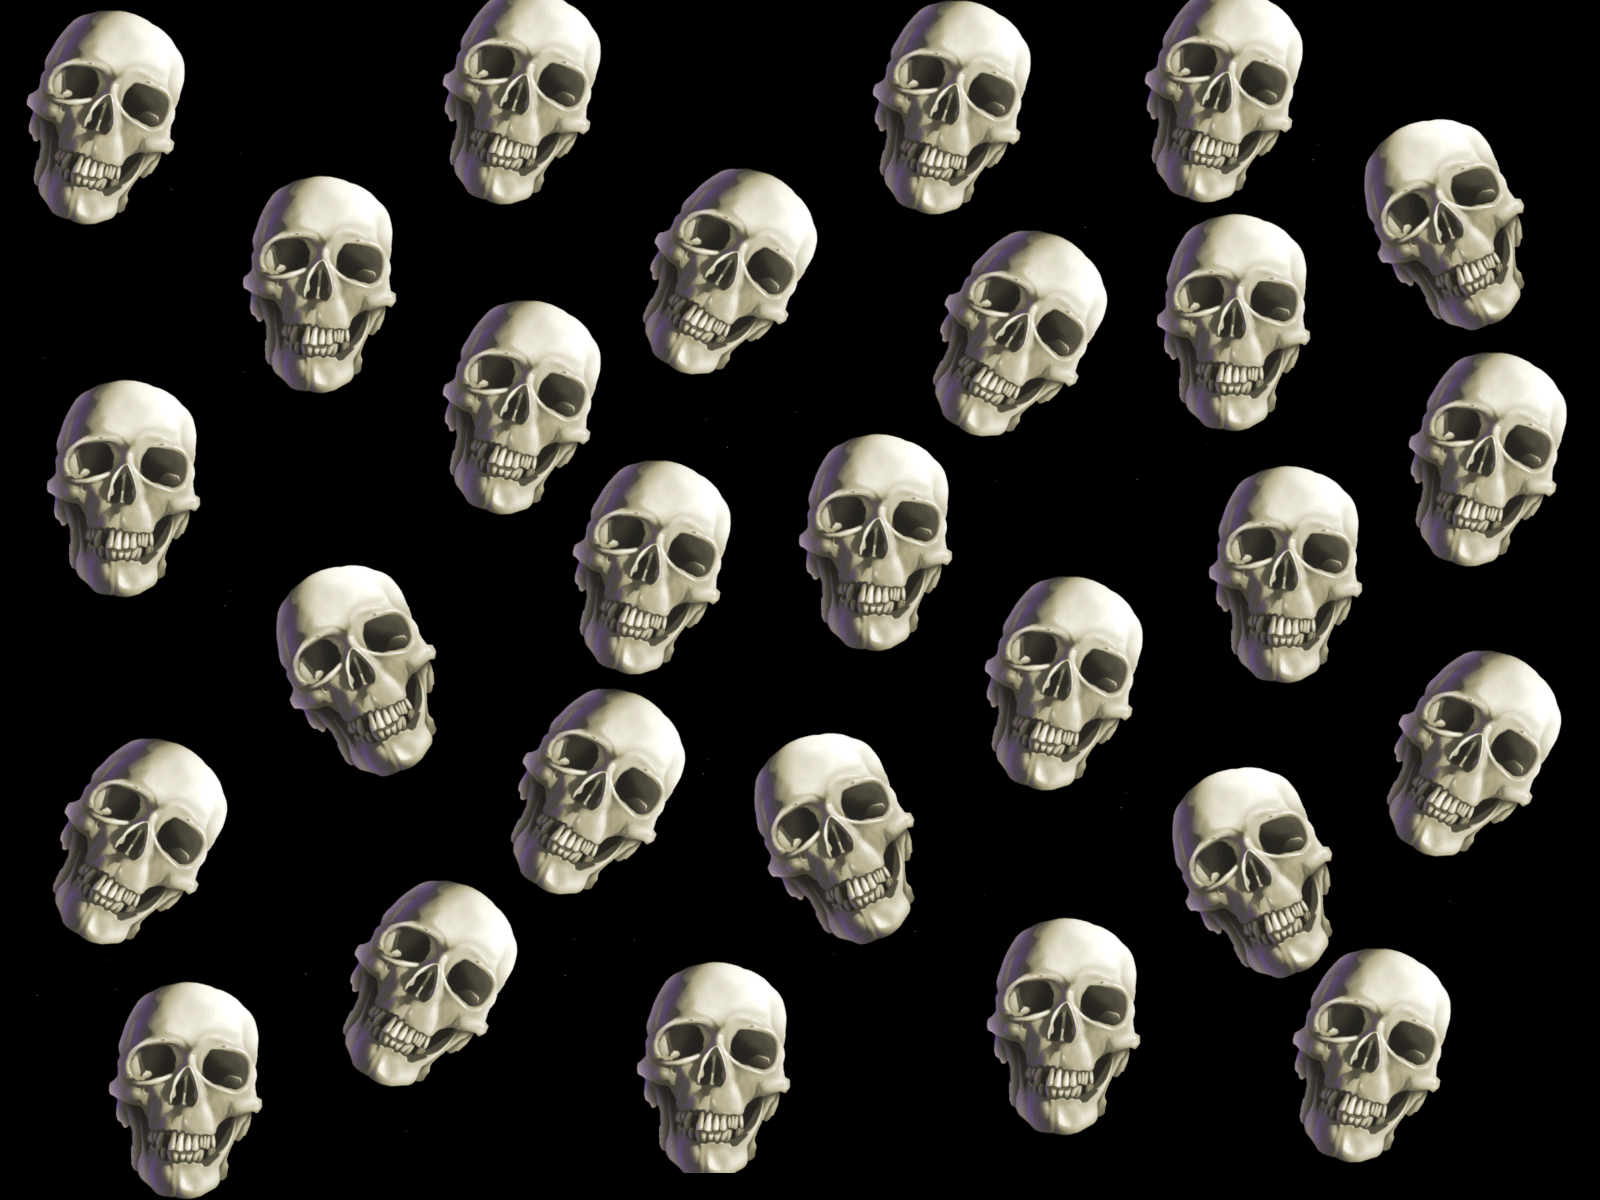 Download wallpaper 3840x2400 skull skeleton bush funny halloween 4k  ultra hd 1610 hd background